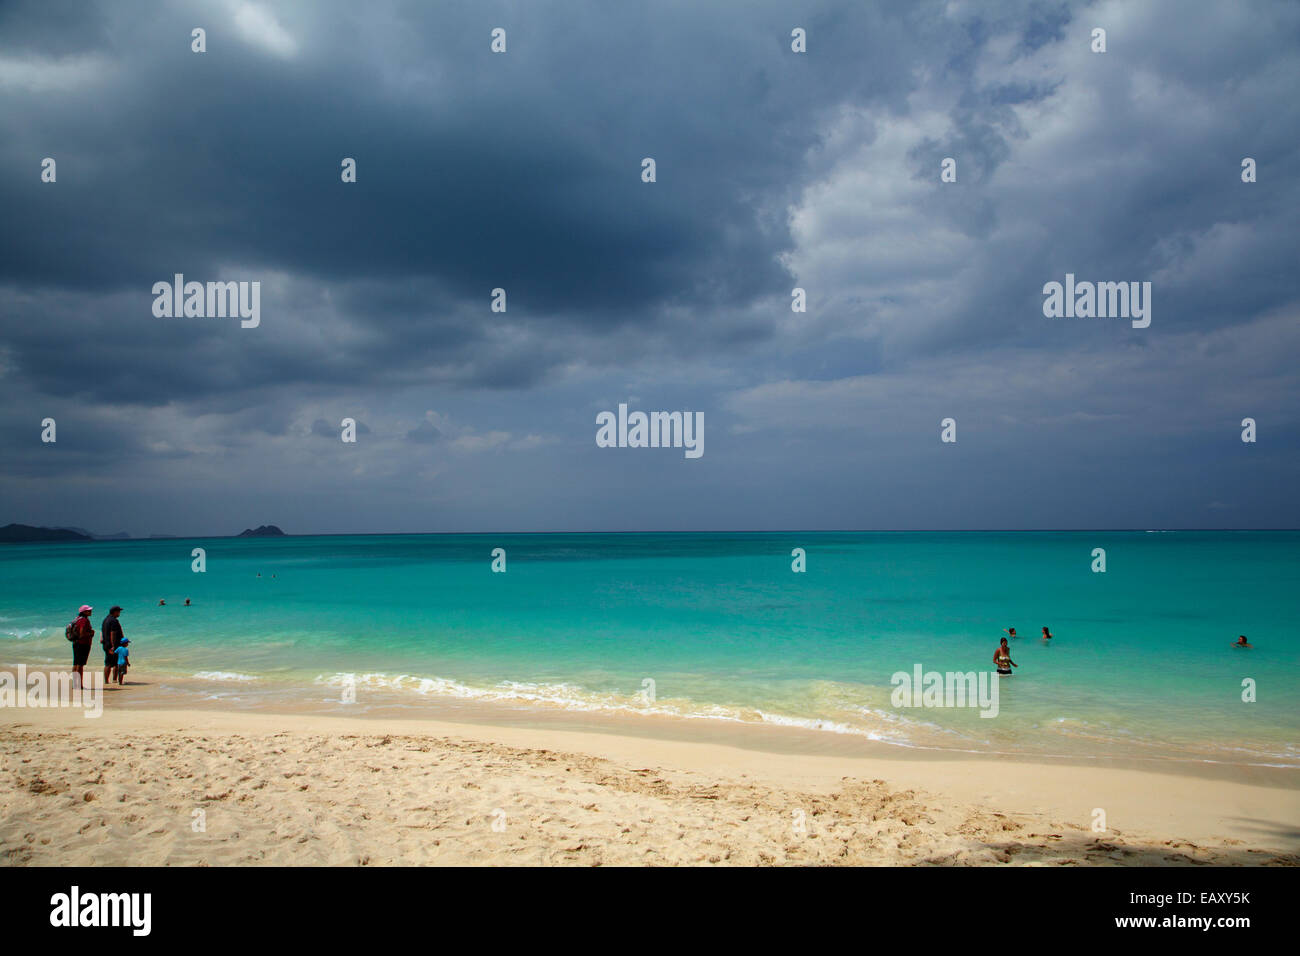 La gente di nuoto a Waimanalo Beach e nuvole di tempesta, Oahu, Hawaii, STATI UNITI D'AMERICA Foto Stock